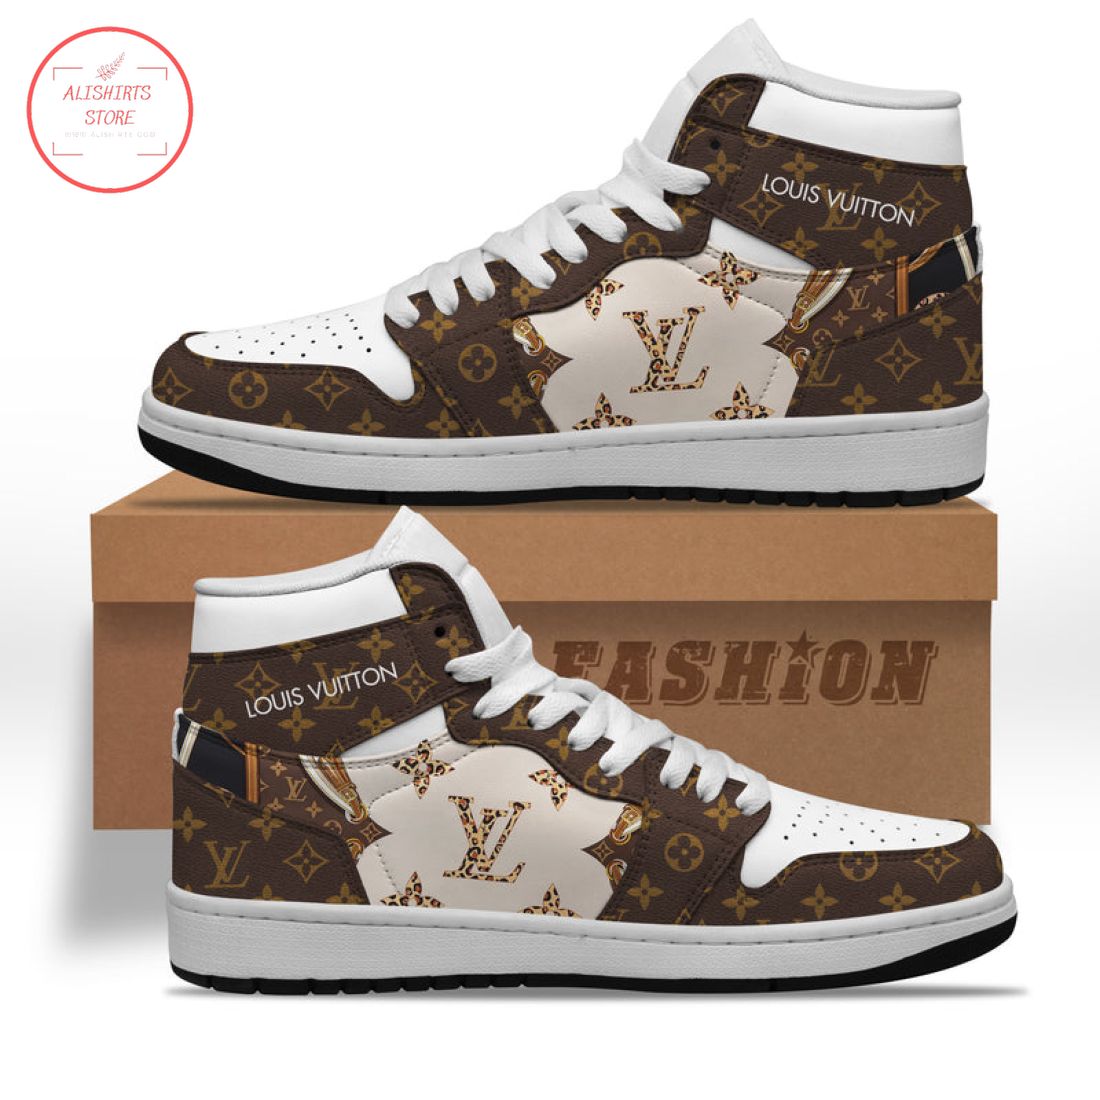 Louis Vuitton Paris High Air Jordan 1 Sneaker Shoes